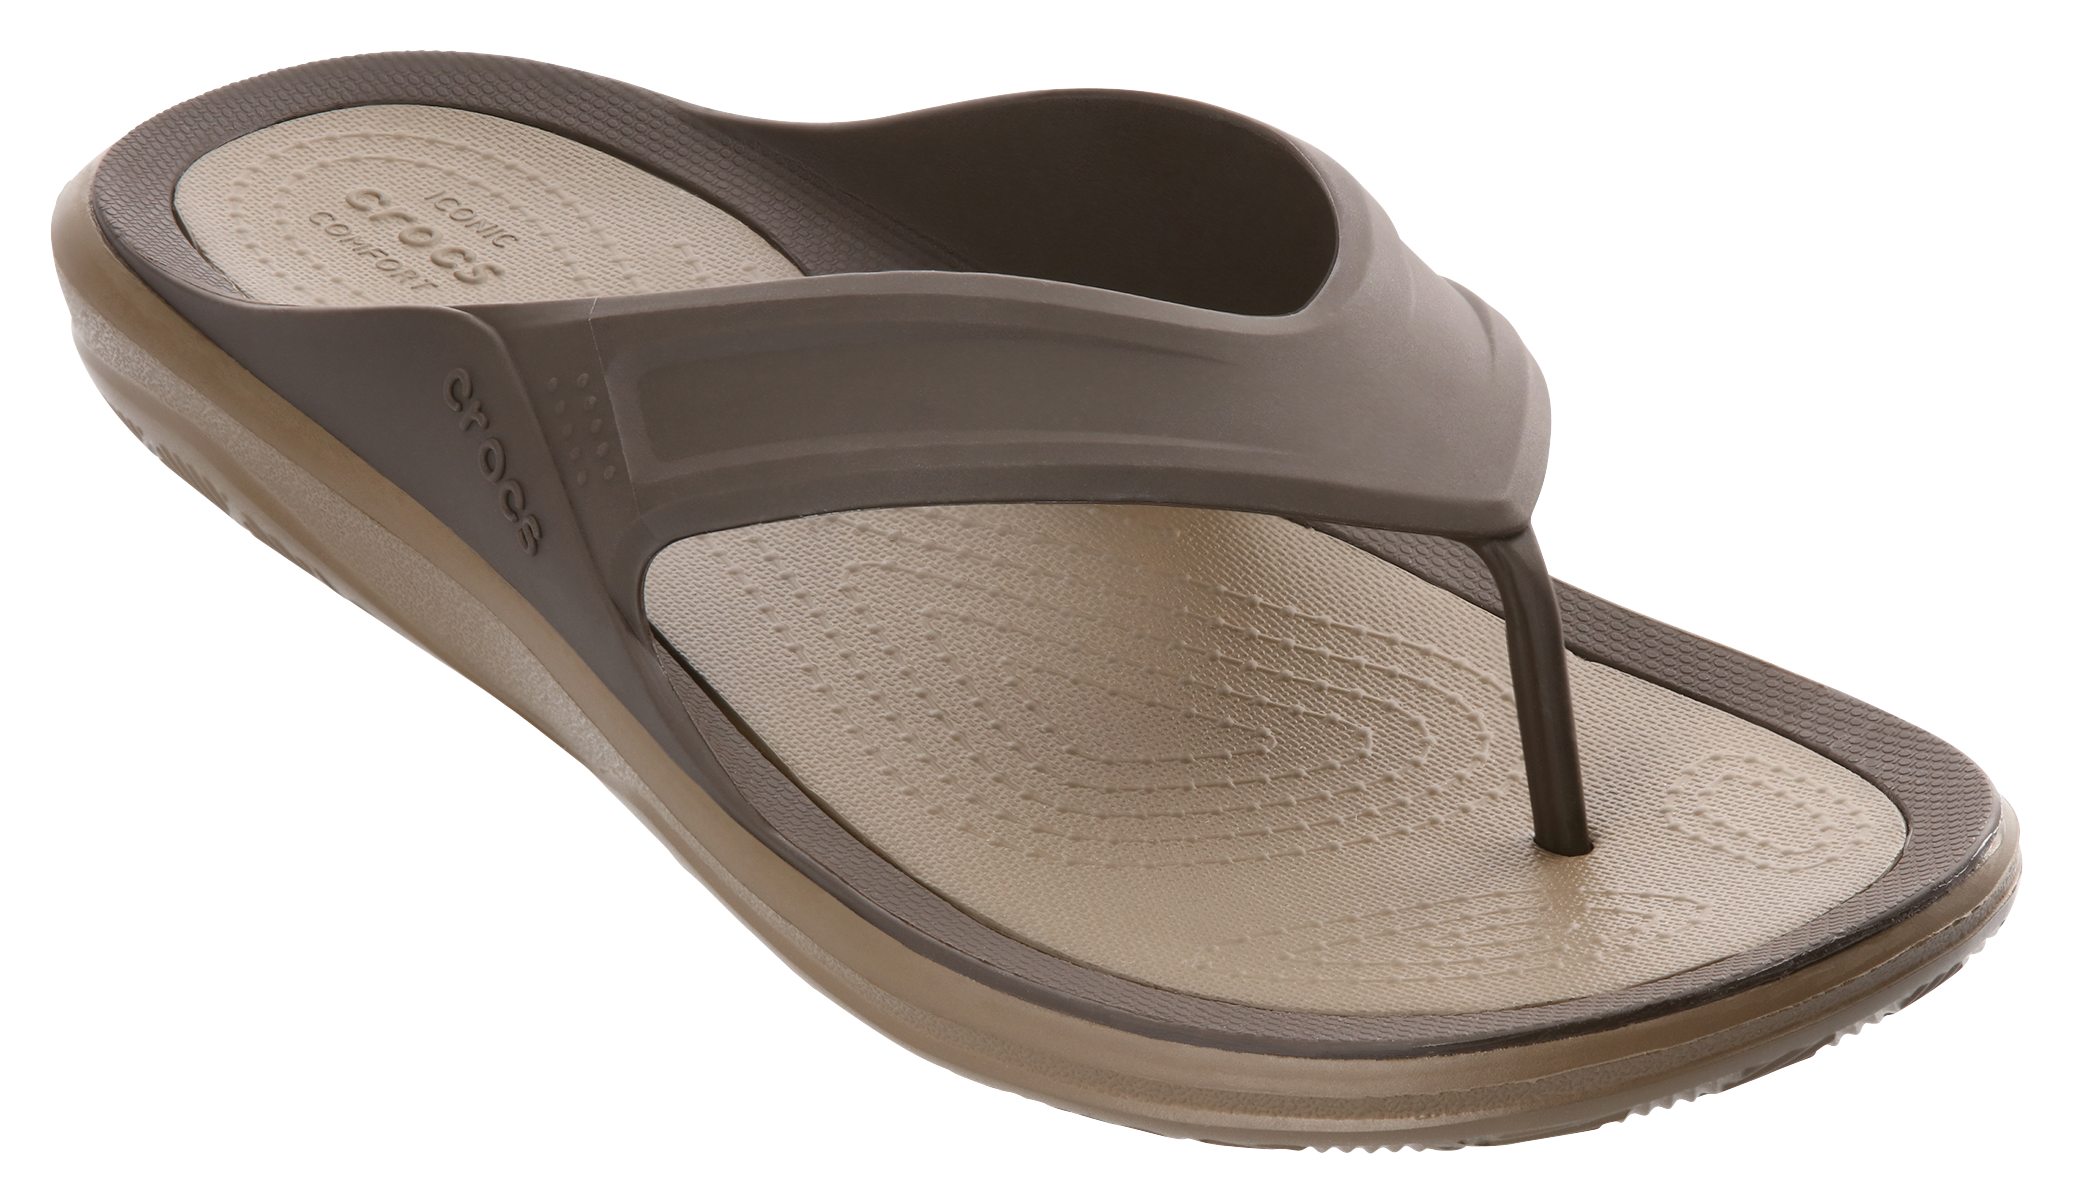 Crocs Swiftwater Wave Flip Thong Sandals for Men - Espresso/Walnut - 13M